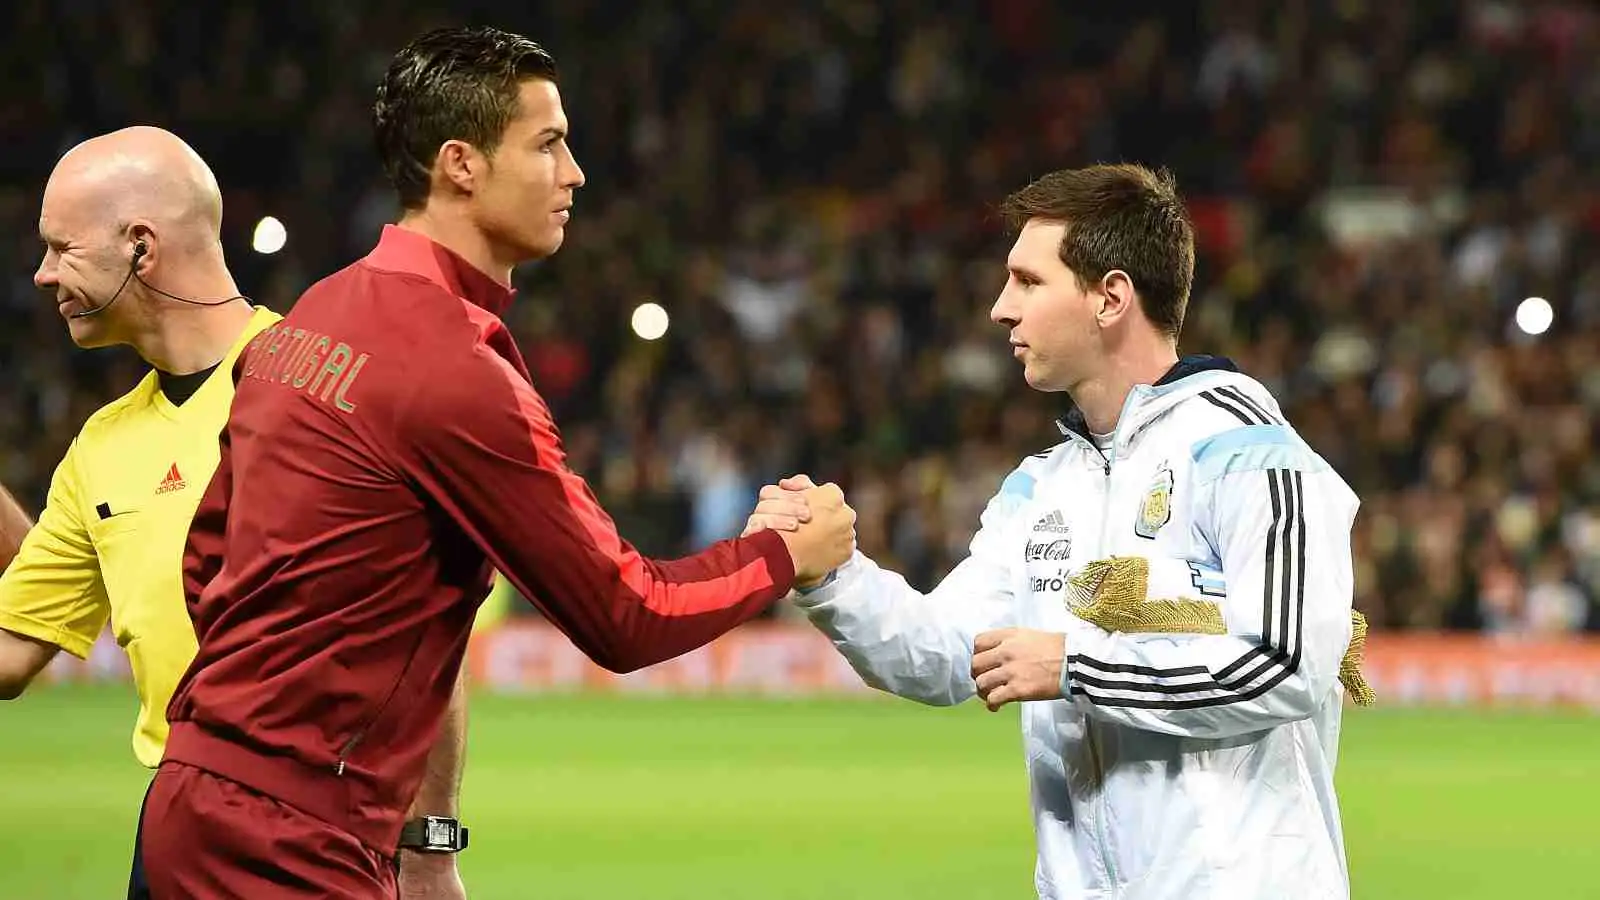 Cristiano Ronaldo v Lionel Messi: Who was the greatest footballer